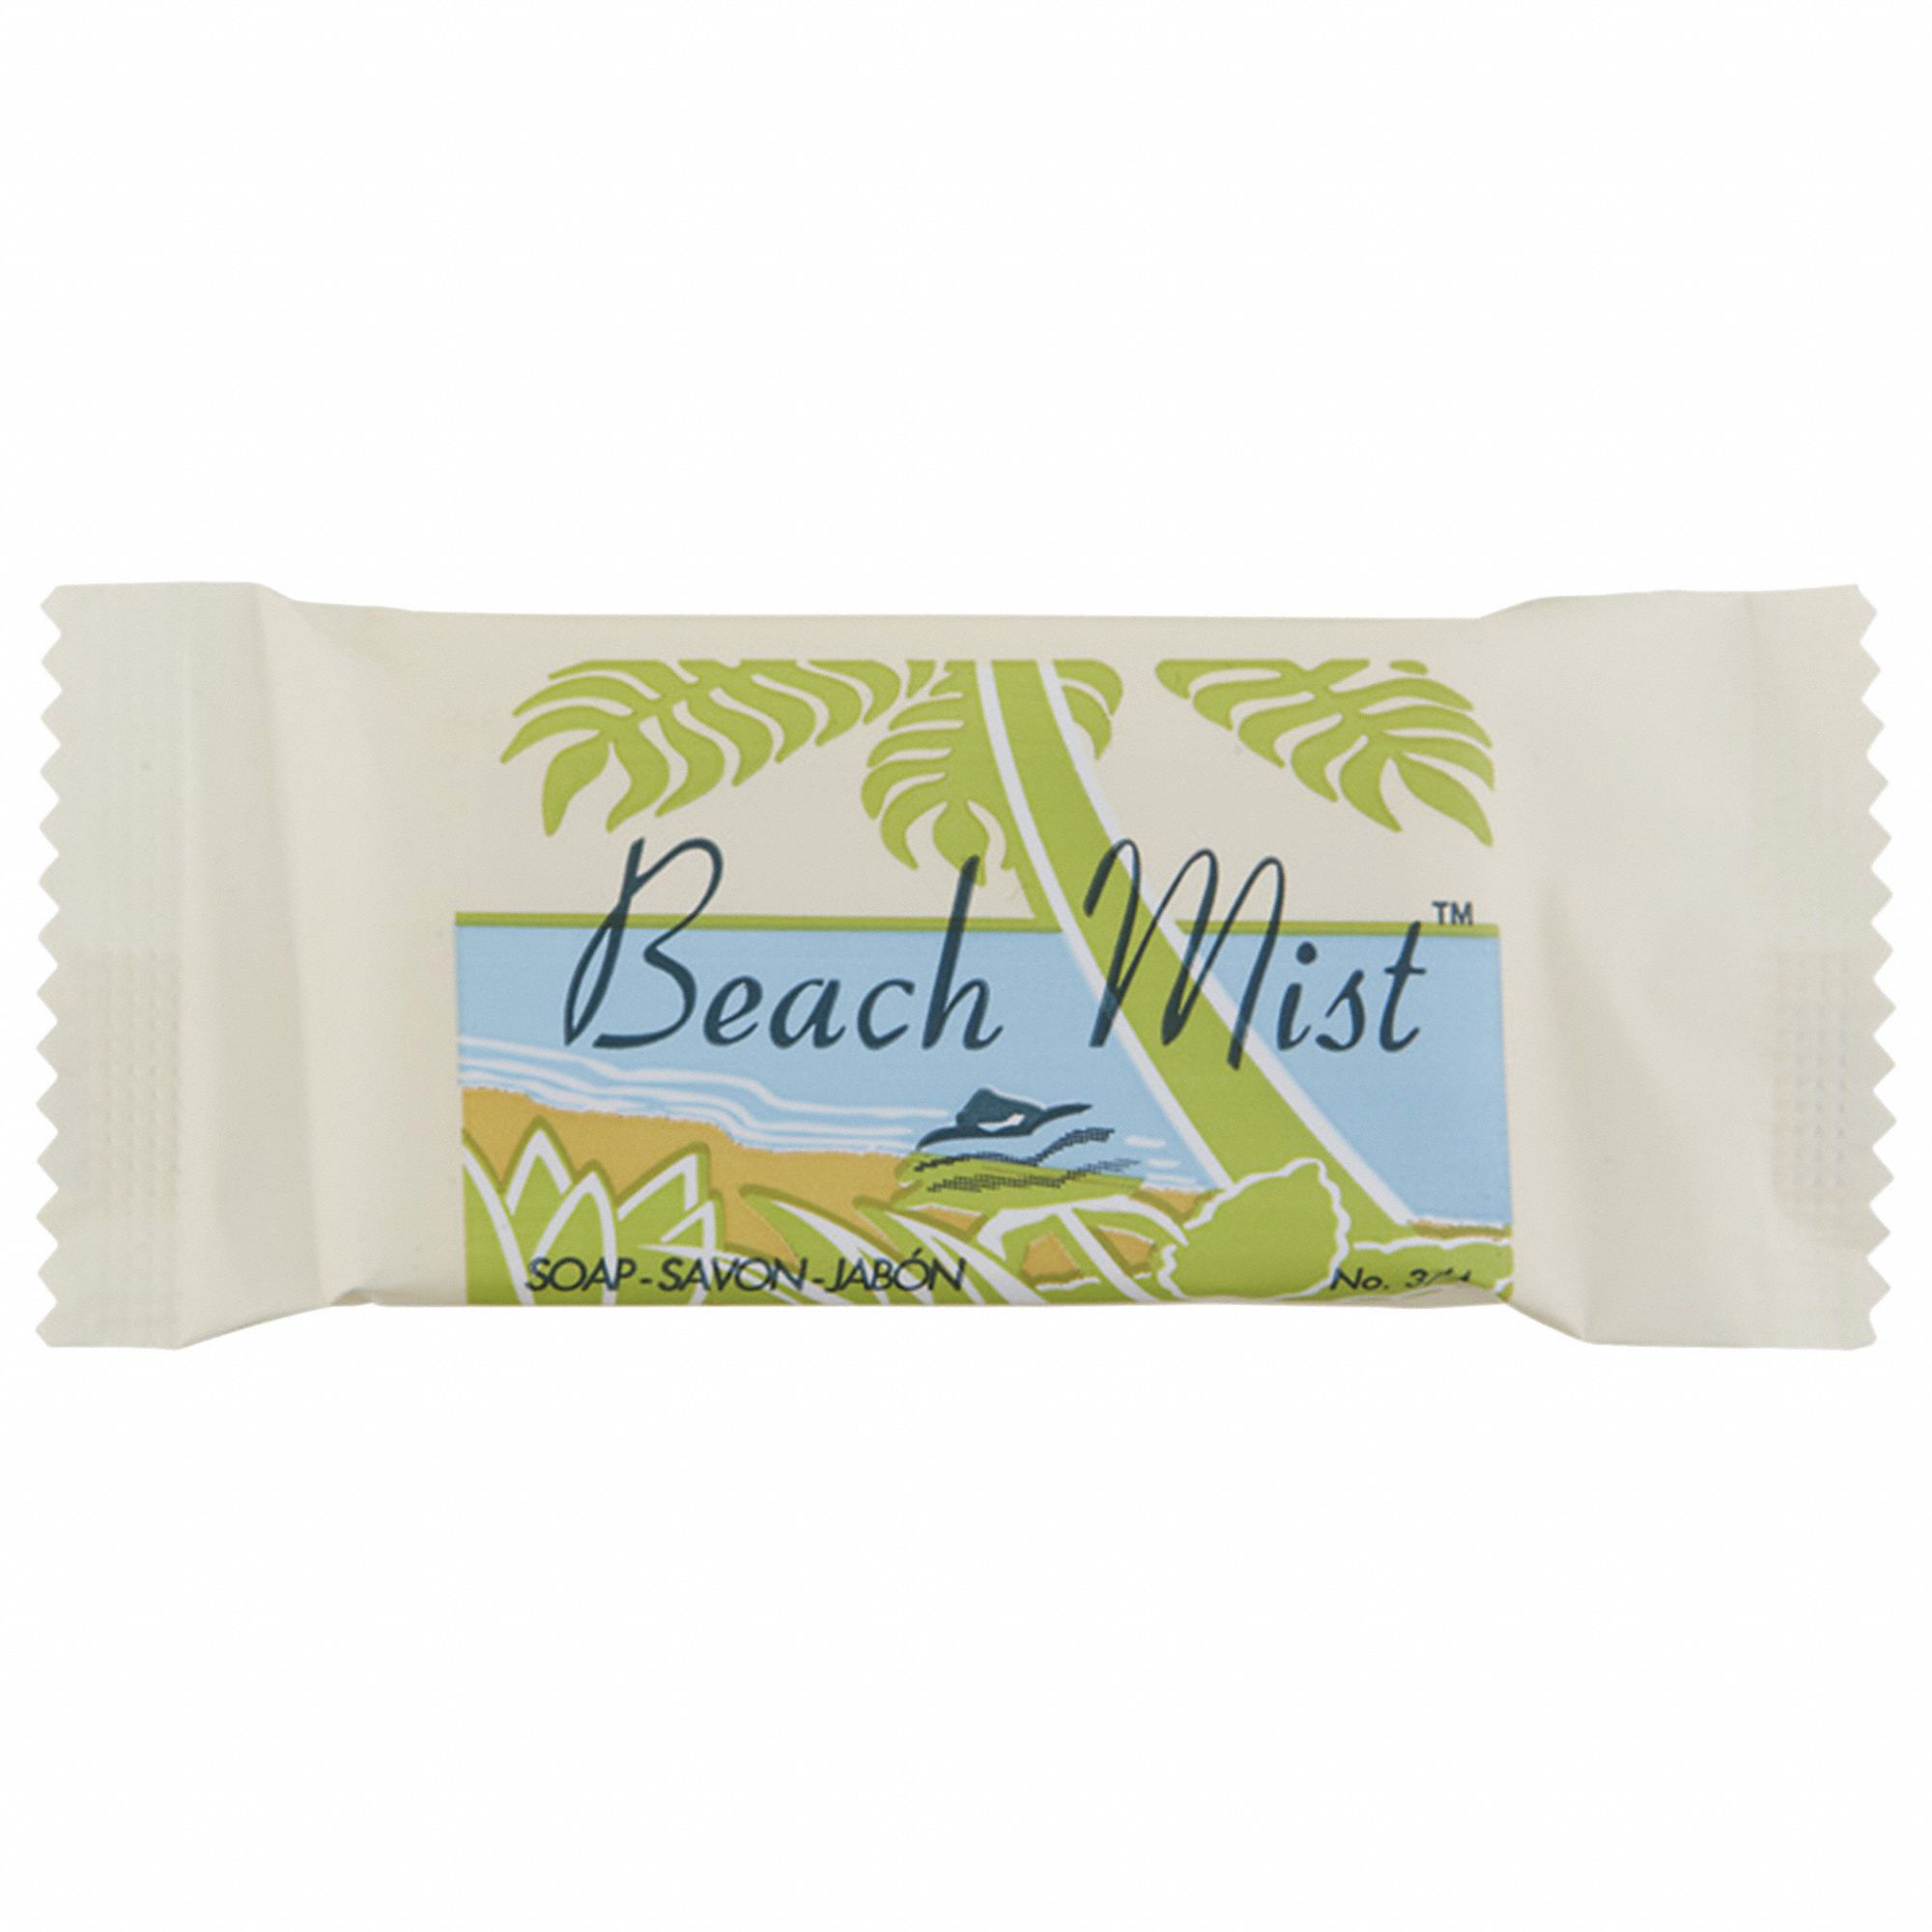 Body Soap: Beachmist, #3/4, Wrapped, Deodorizing, Fresh, Deodorant, 1,000 PK